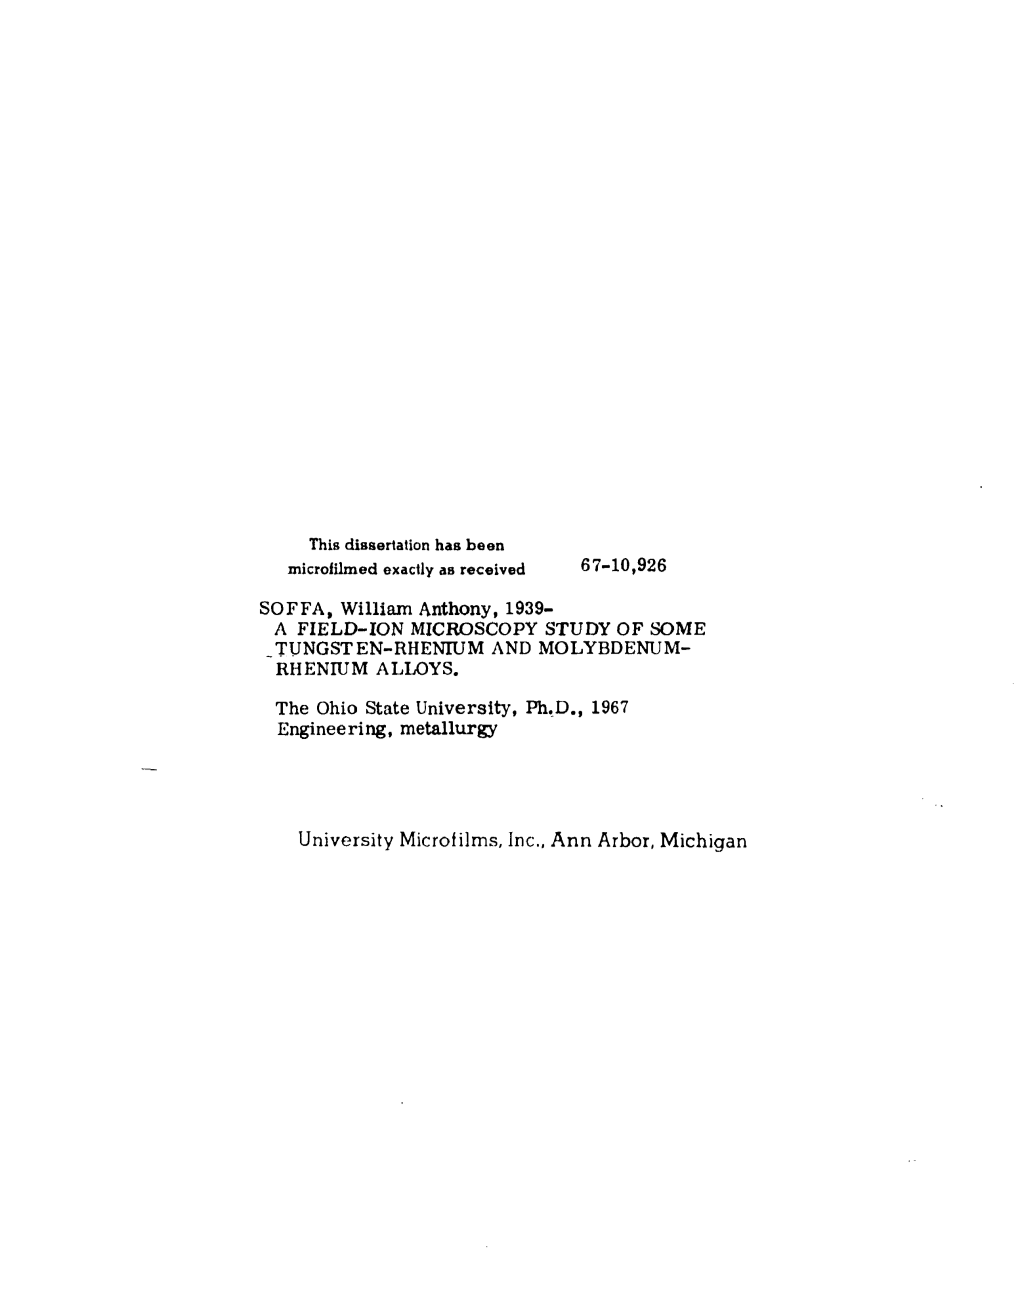 SOFFA, William Anthony, 1939- a FIELD-ION MICROSCOPY STUDY of SOME TUNGSTEN-RHENIUM and MOLYBDENUM- RHENIUM ALLOYS